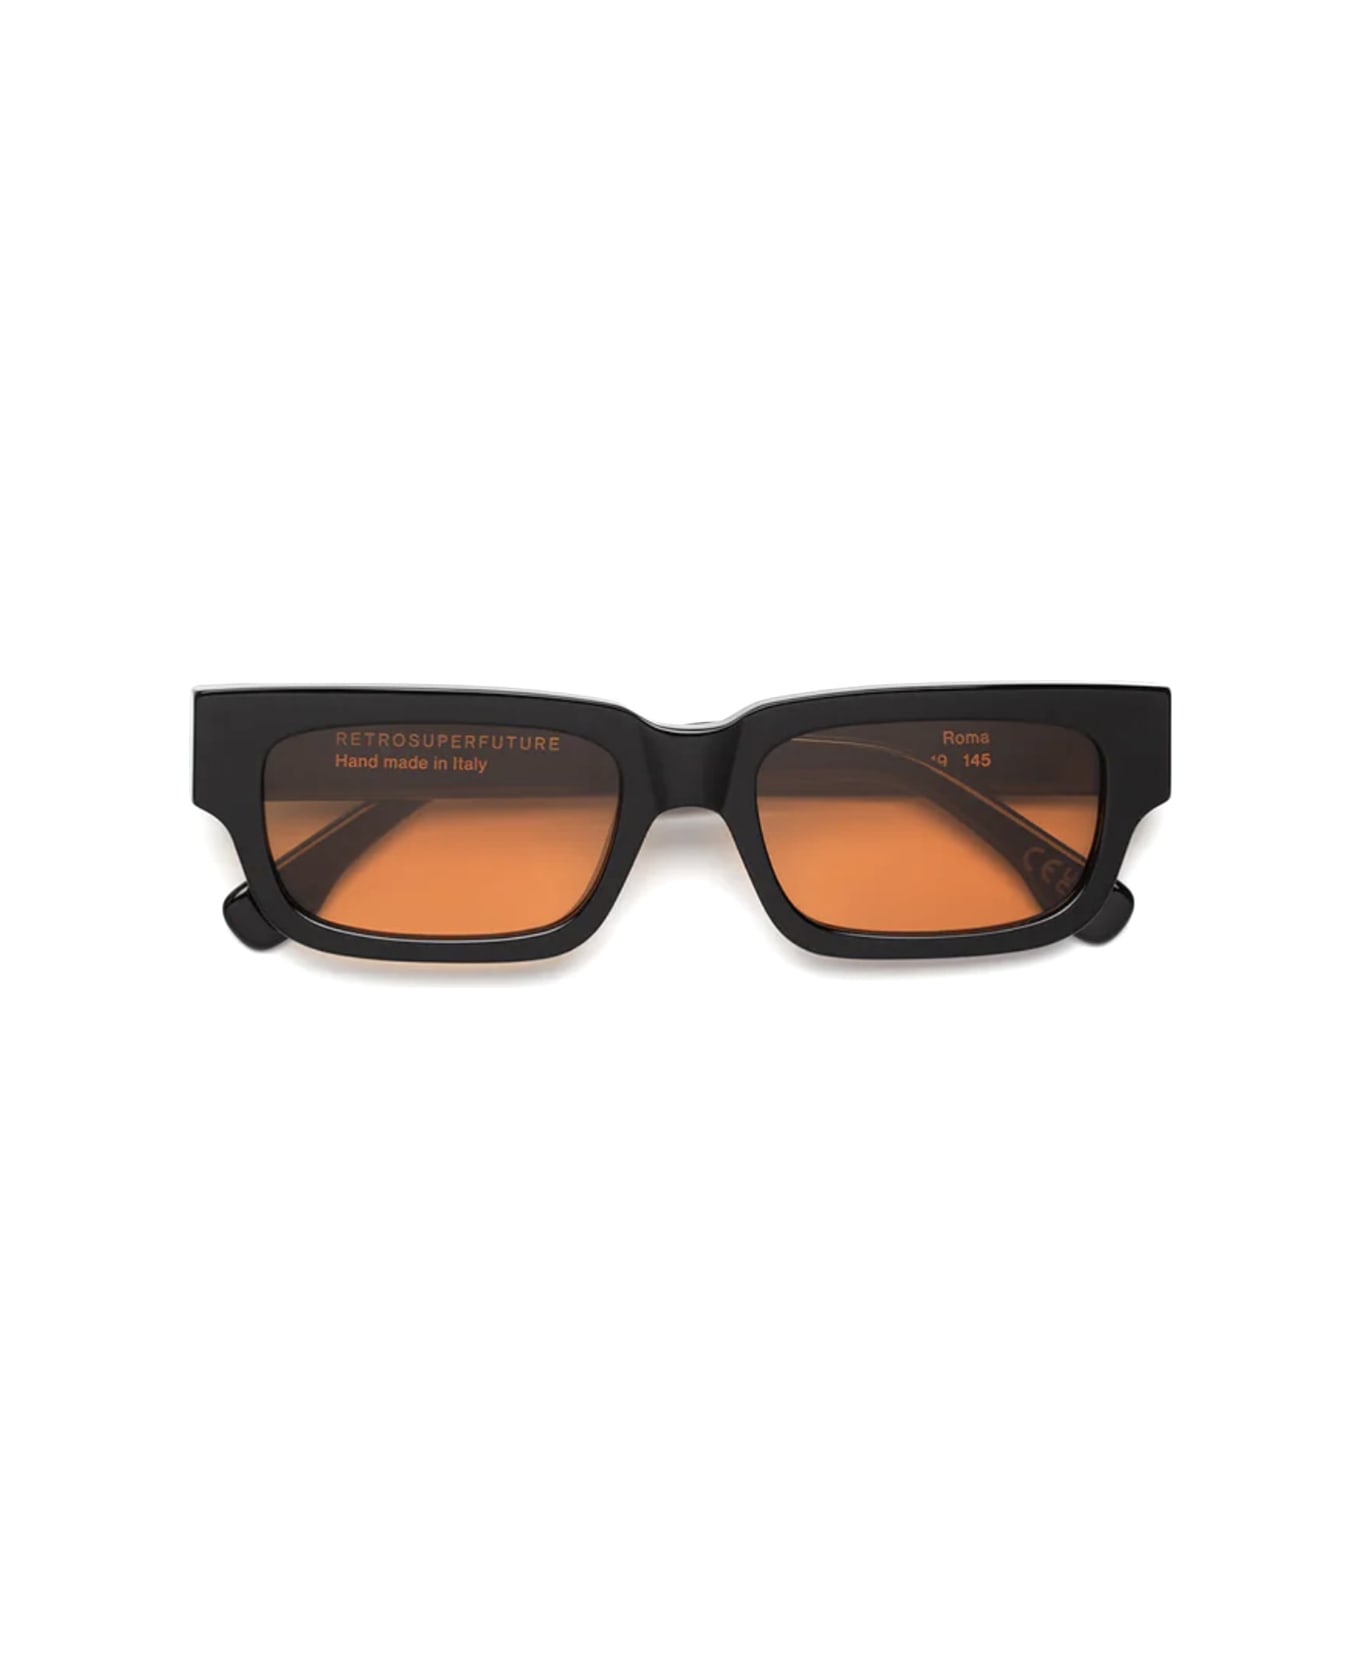 RETROSUPERFUTURE Roma Refined Black Sunglasses - Nero サングラス